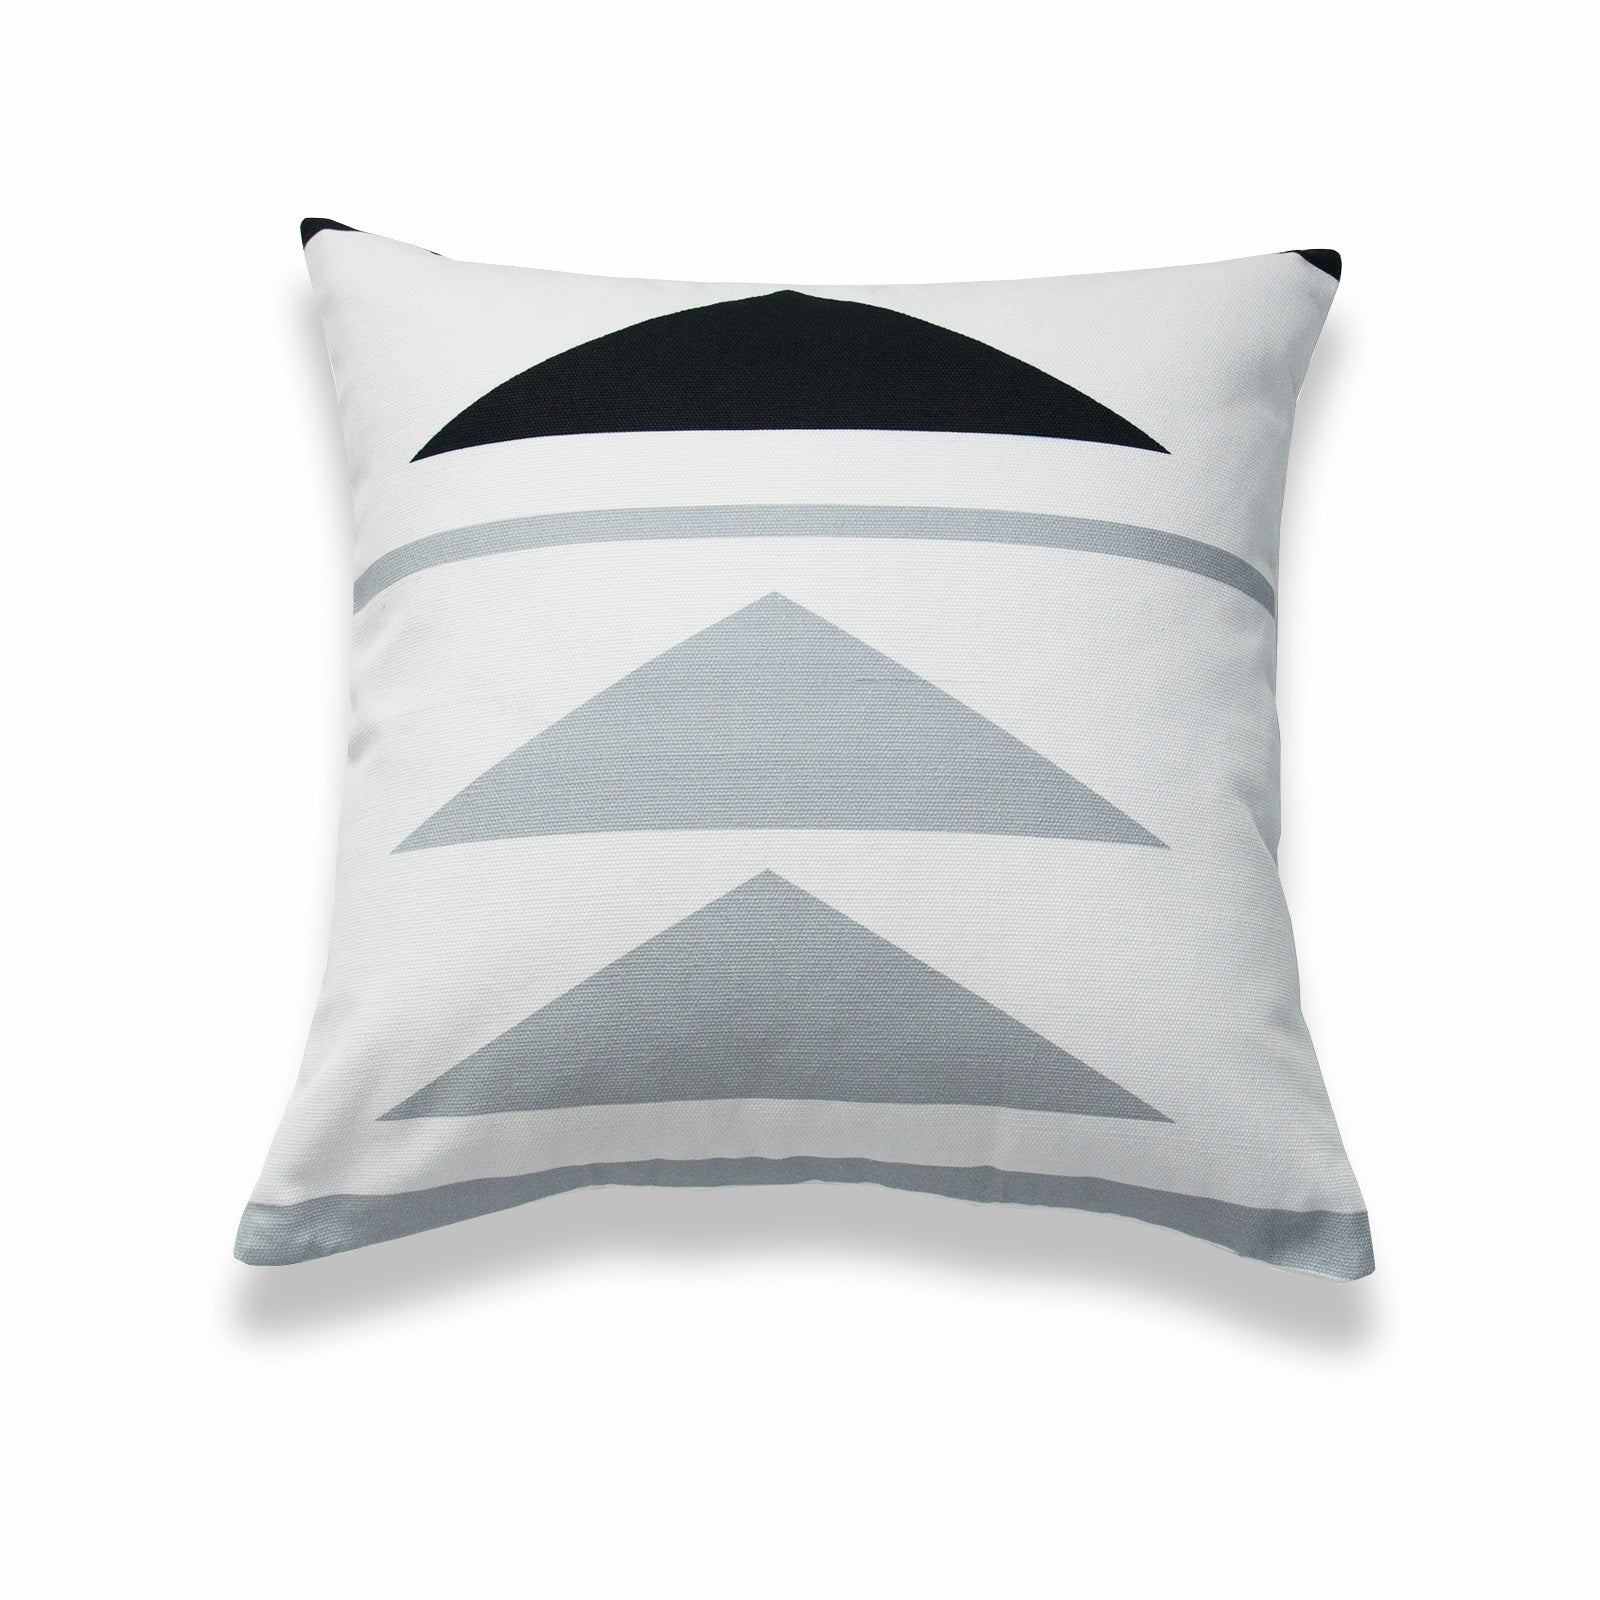 Aztec Print Pillow Cover, Triangle, Black White Gray, 18"x18"